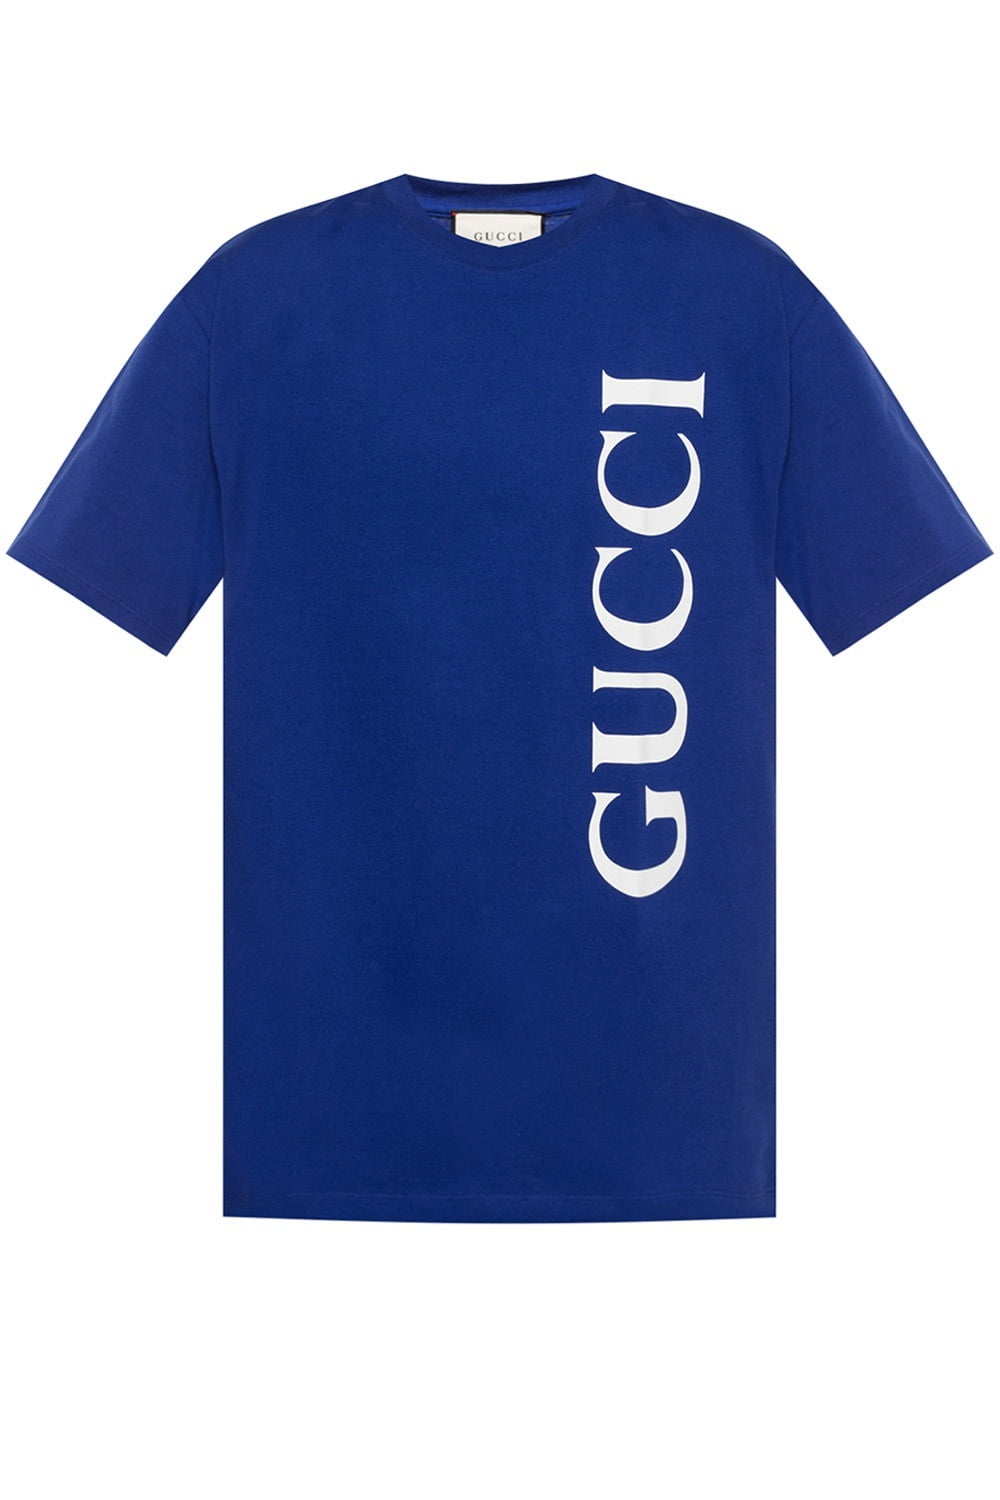 gucci shirts starting price